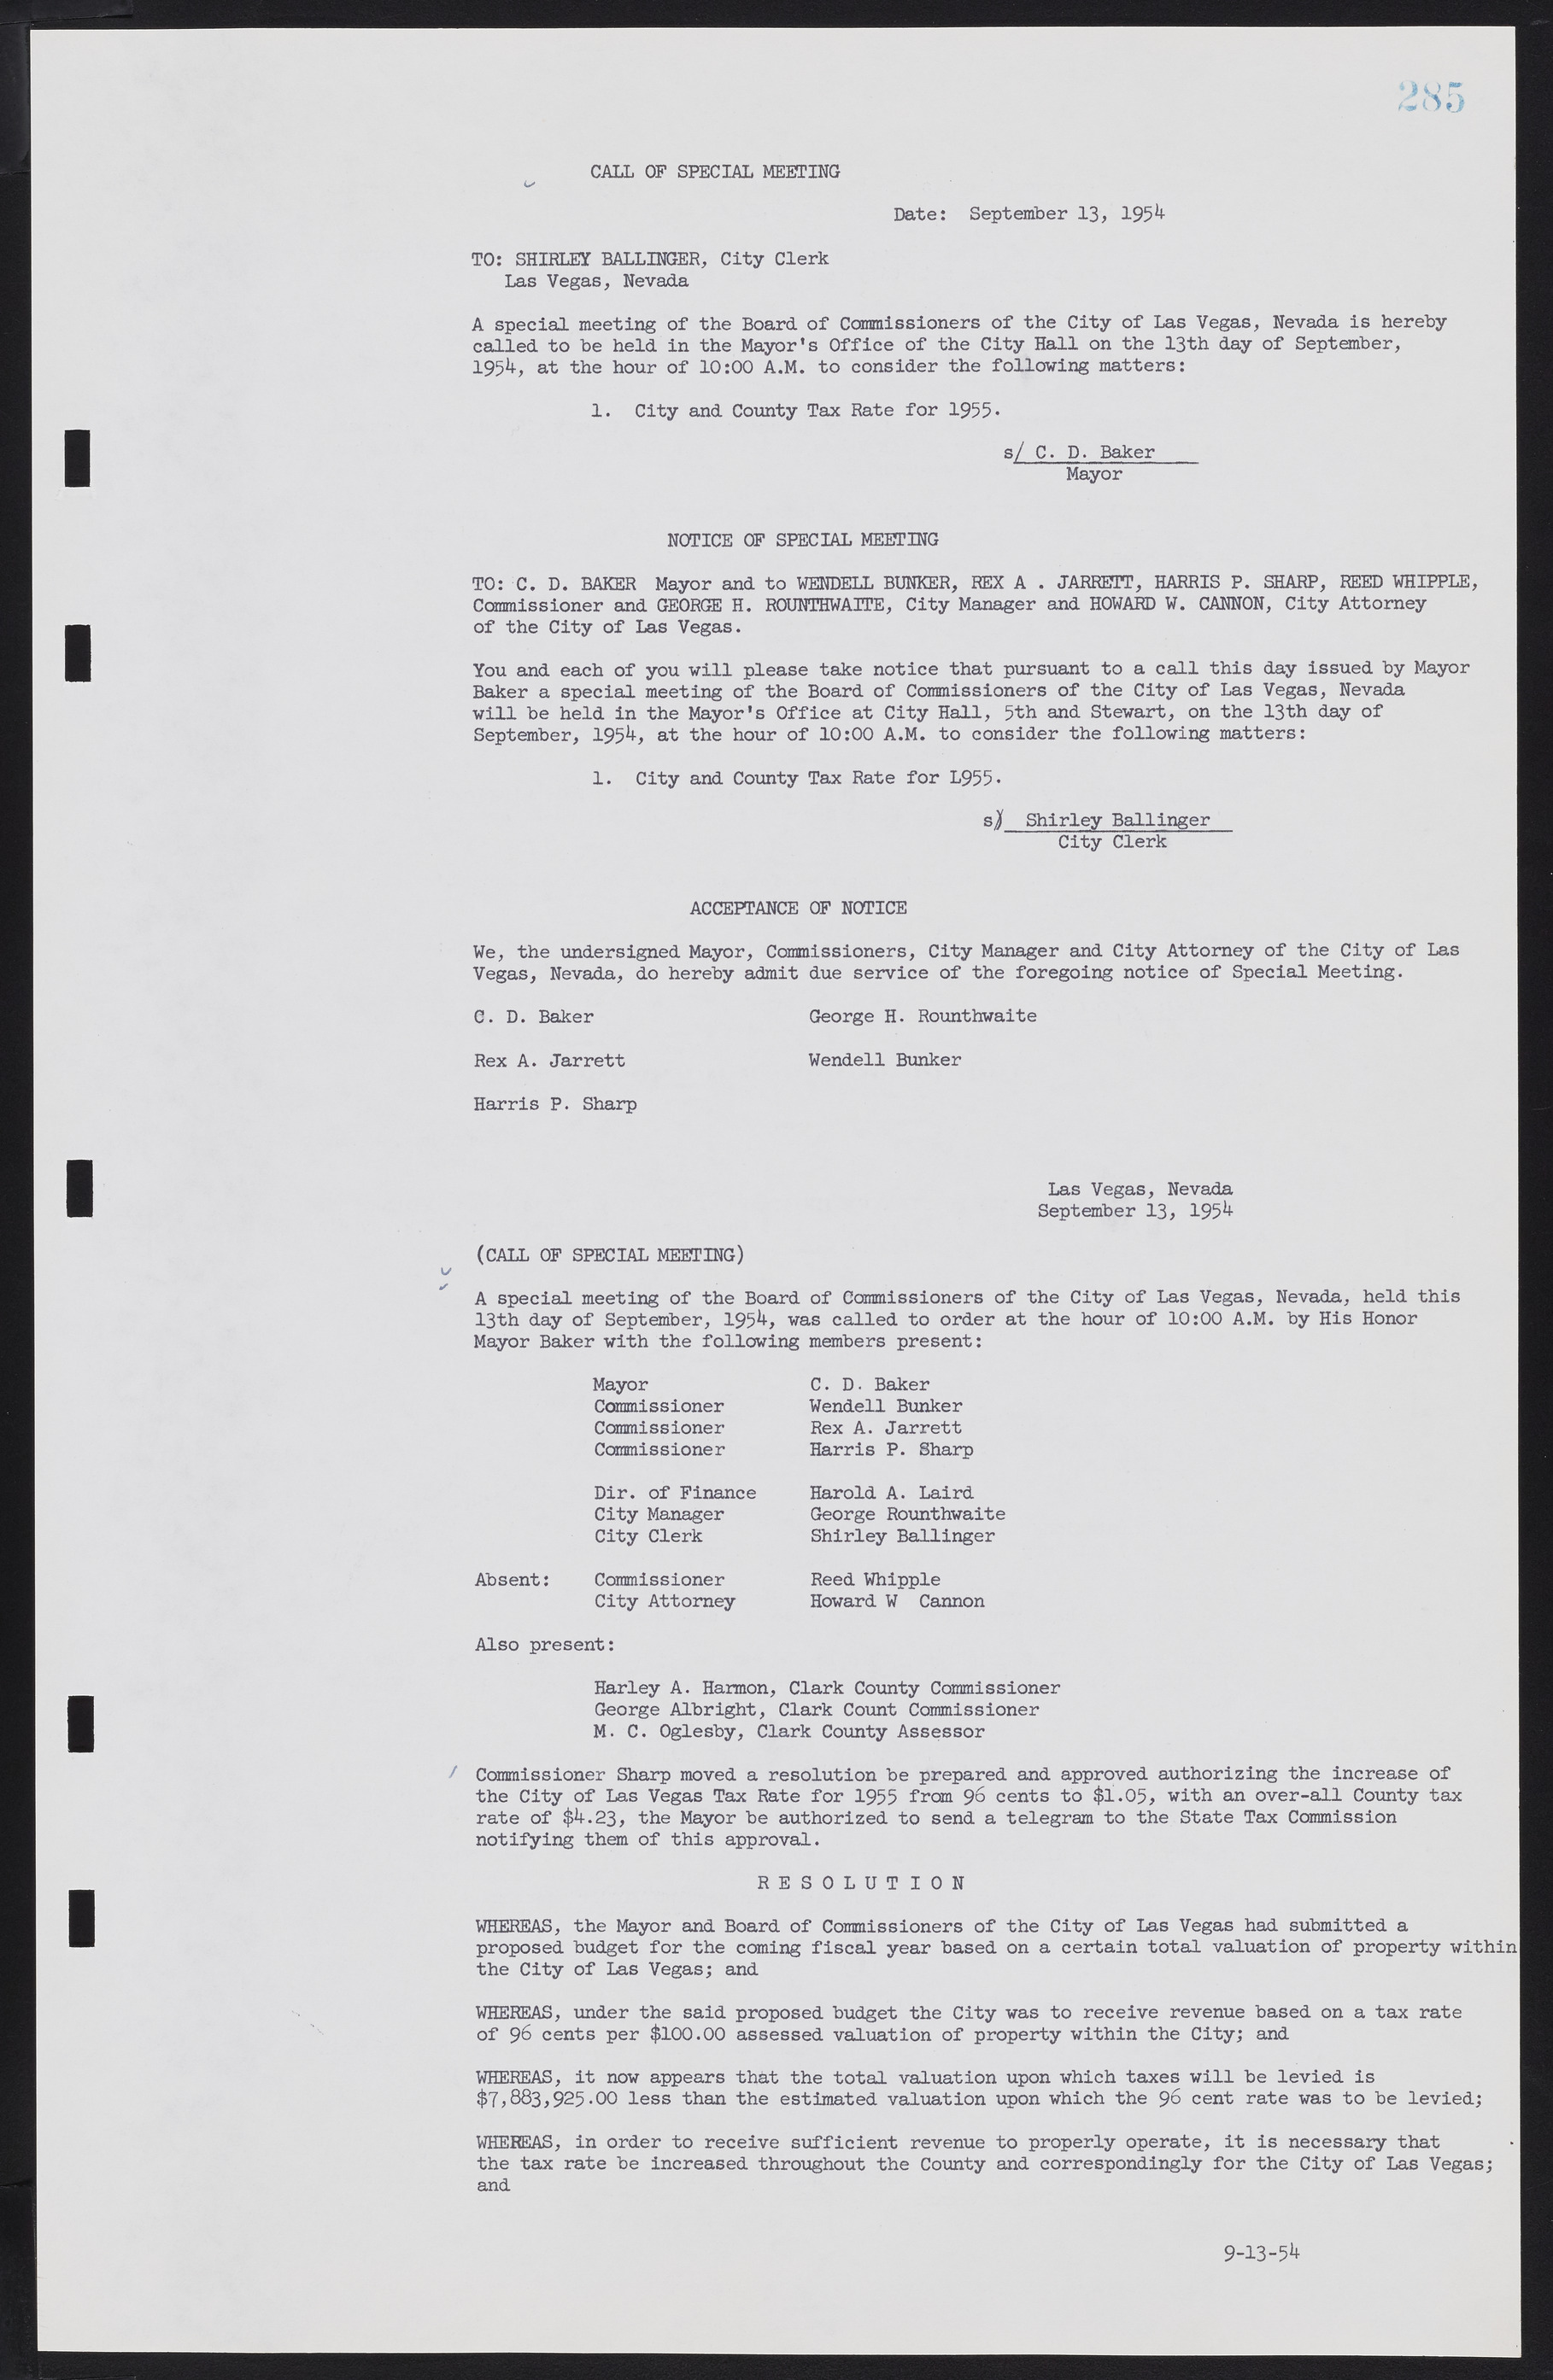 Las Vegas City Commission Minutes, February 17, 1954 to September 21, 1955, lvc000009-291